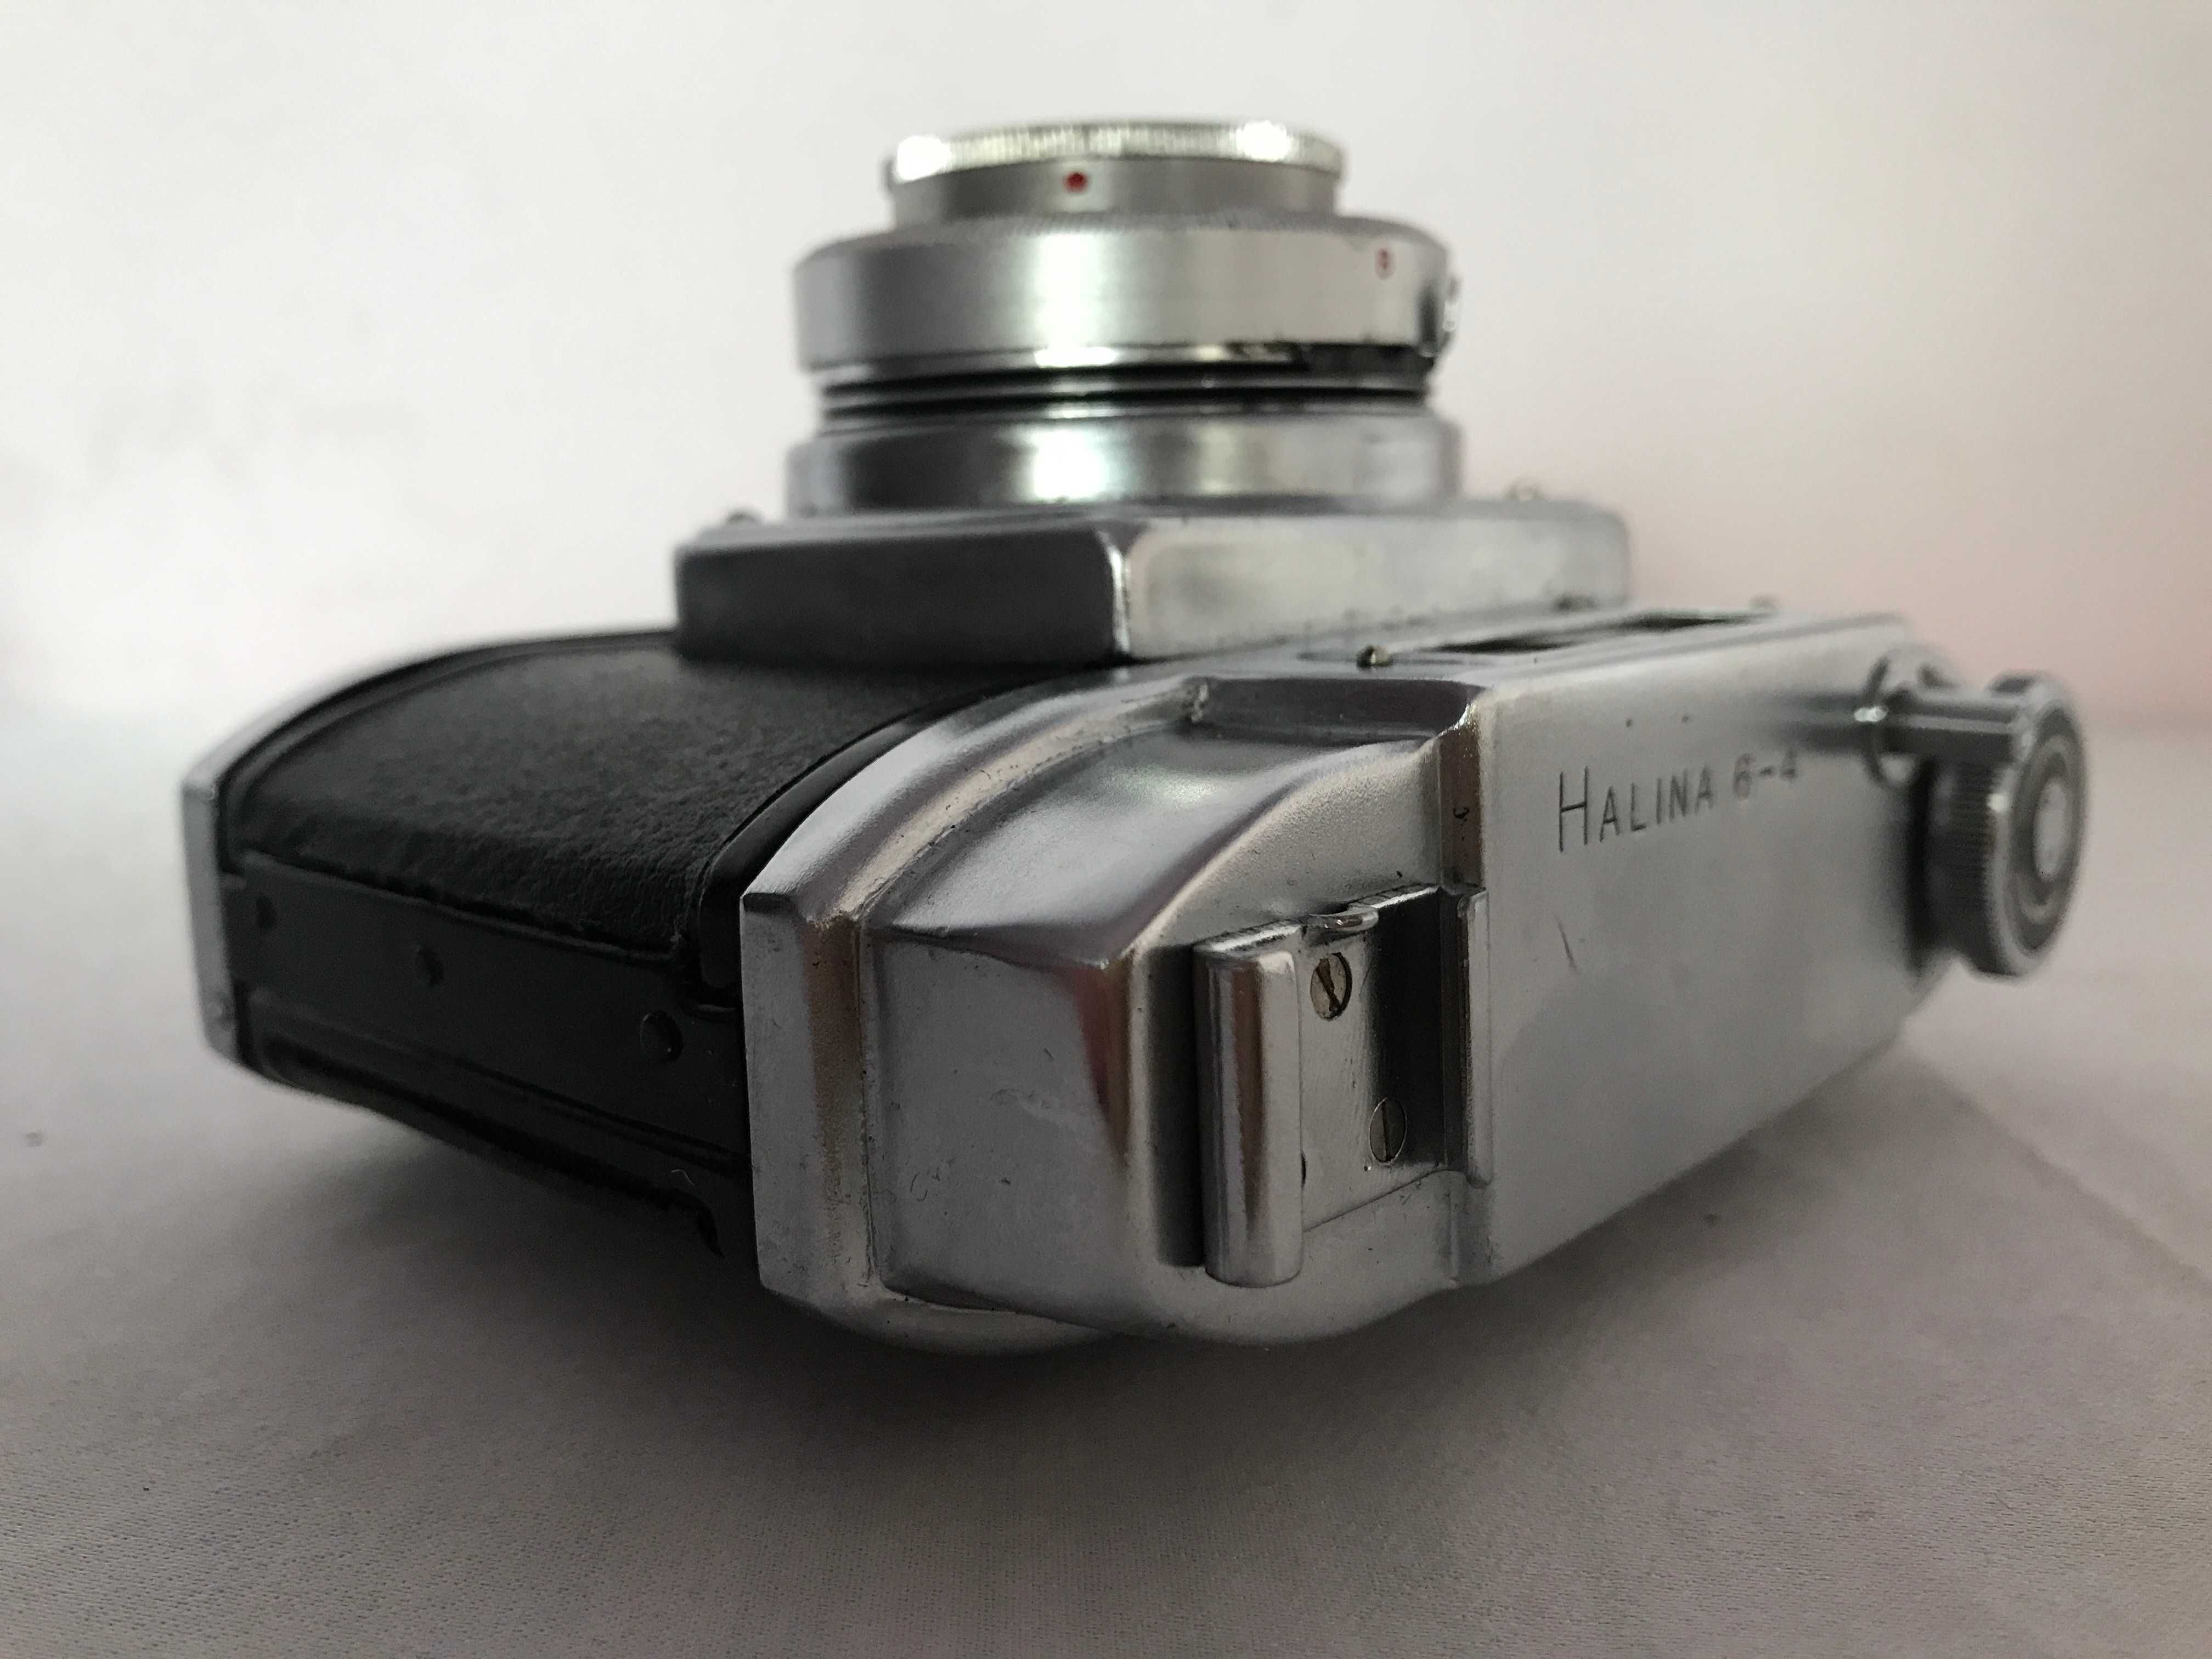 Sprzedam aparat Halina 6-4 na film 120mm, Lomography, point&shoot